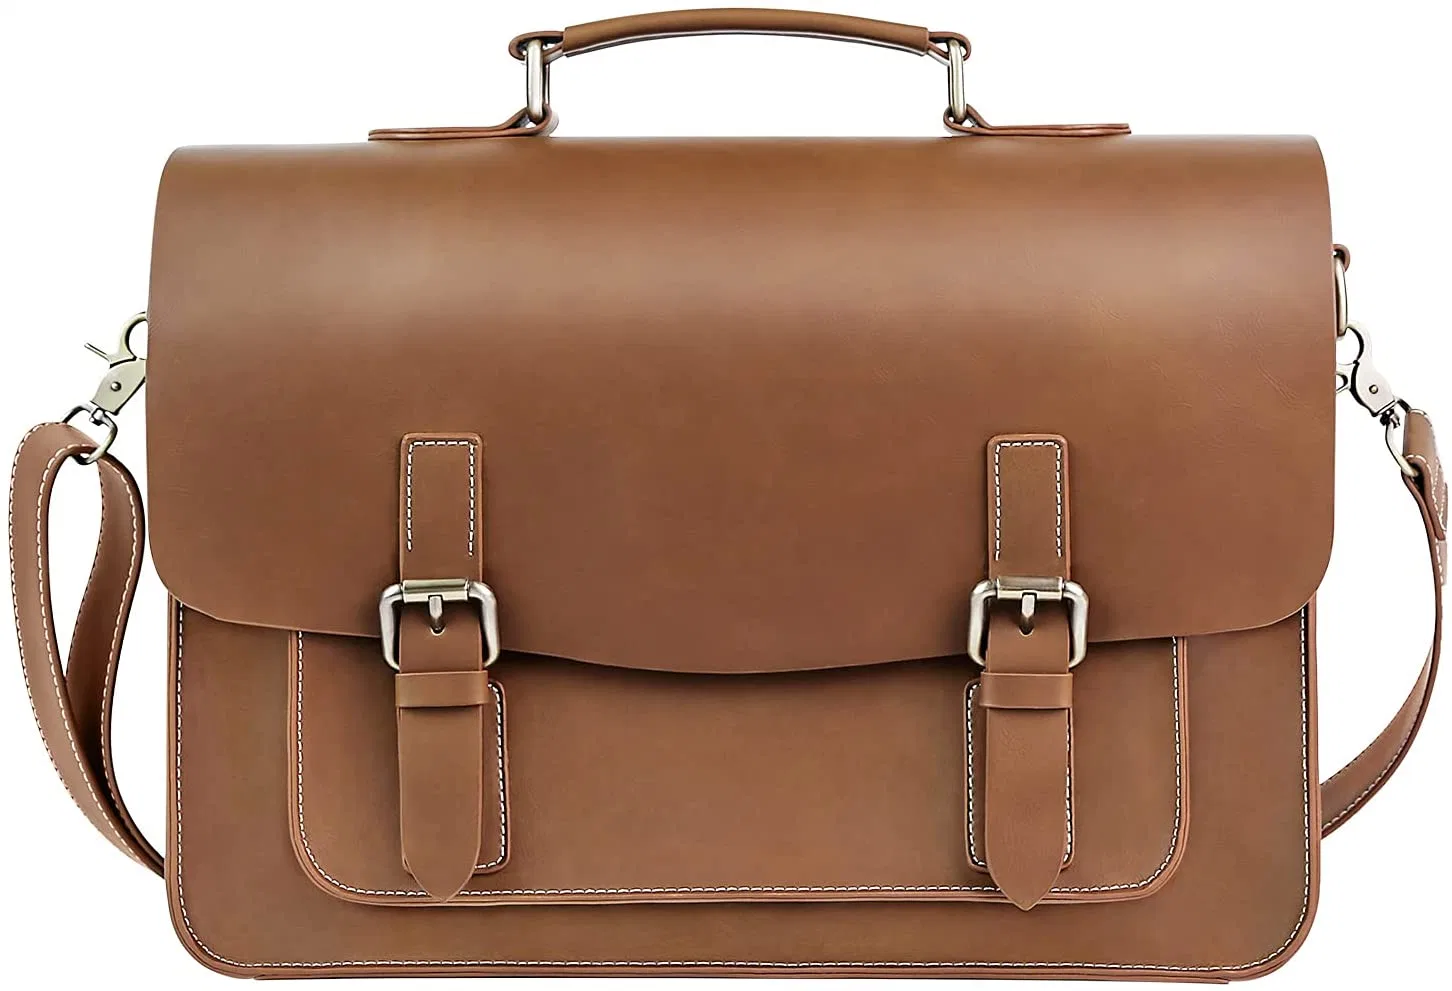 Mens Messenger Bag - Vintage Fashion 15.6 Inch Waterproof Leather Laptop Briefcase Large Satchel Shoulder Bag Computer Bag, Leather Laptop Bag